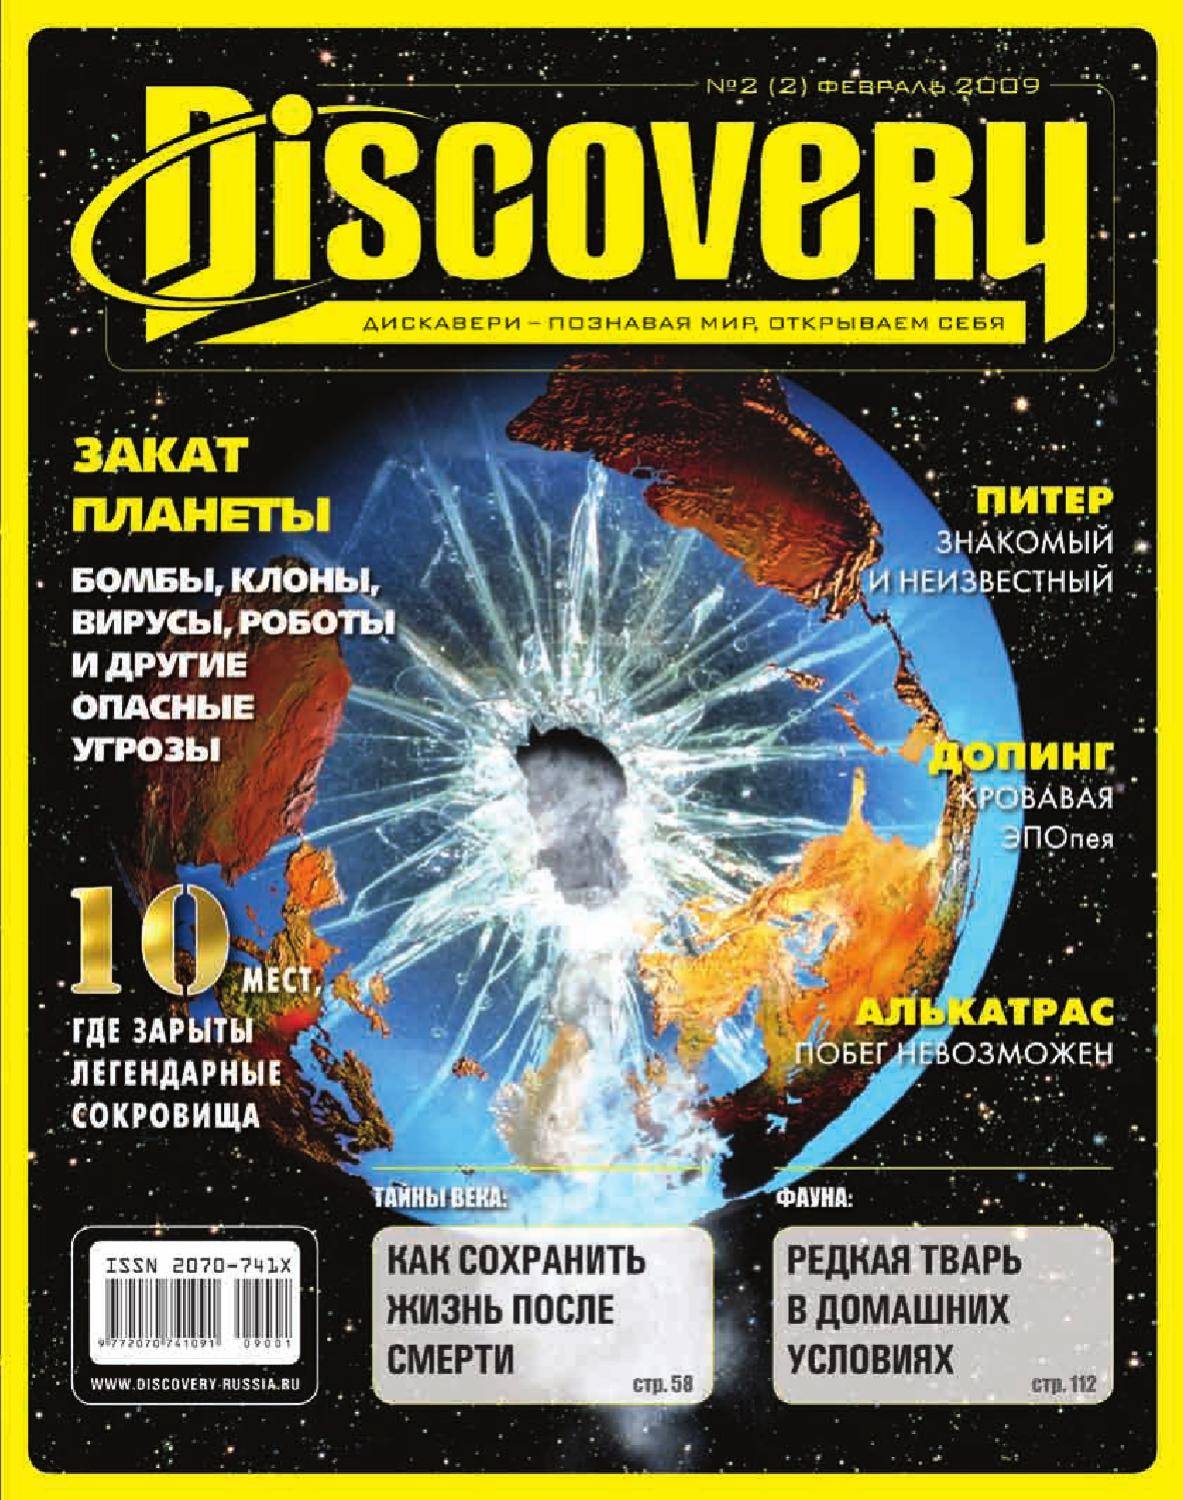 Журнал дискавери. Журнал Discovery. Журнал журнал Discovery. Discovery Дискавери журнал. Discovery журнал 2009.